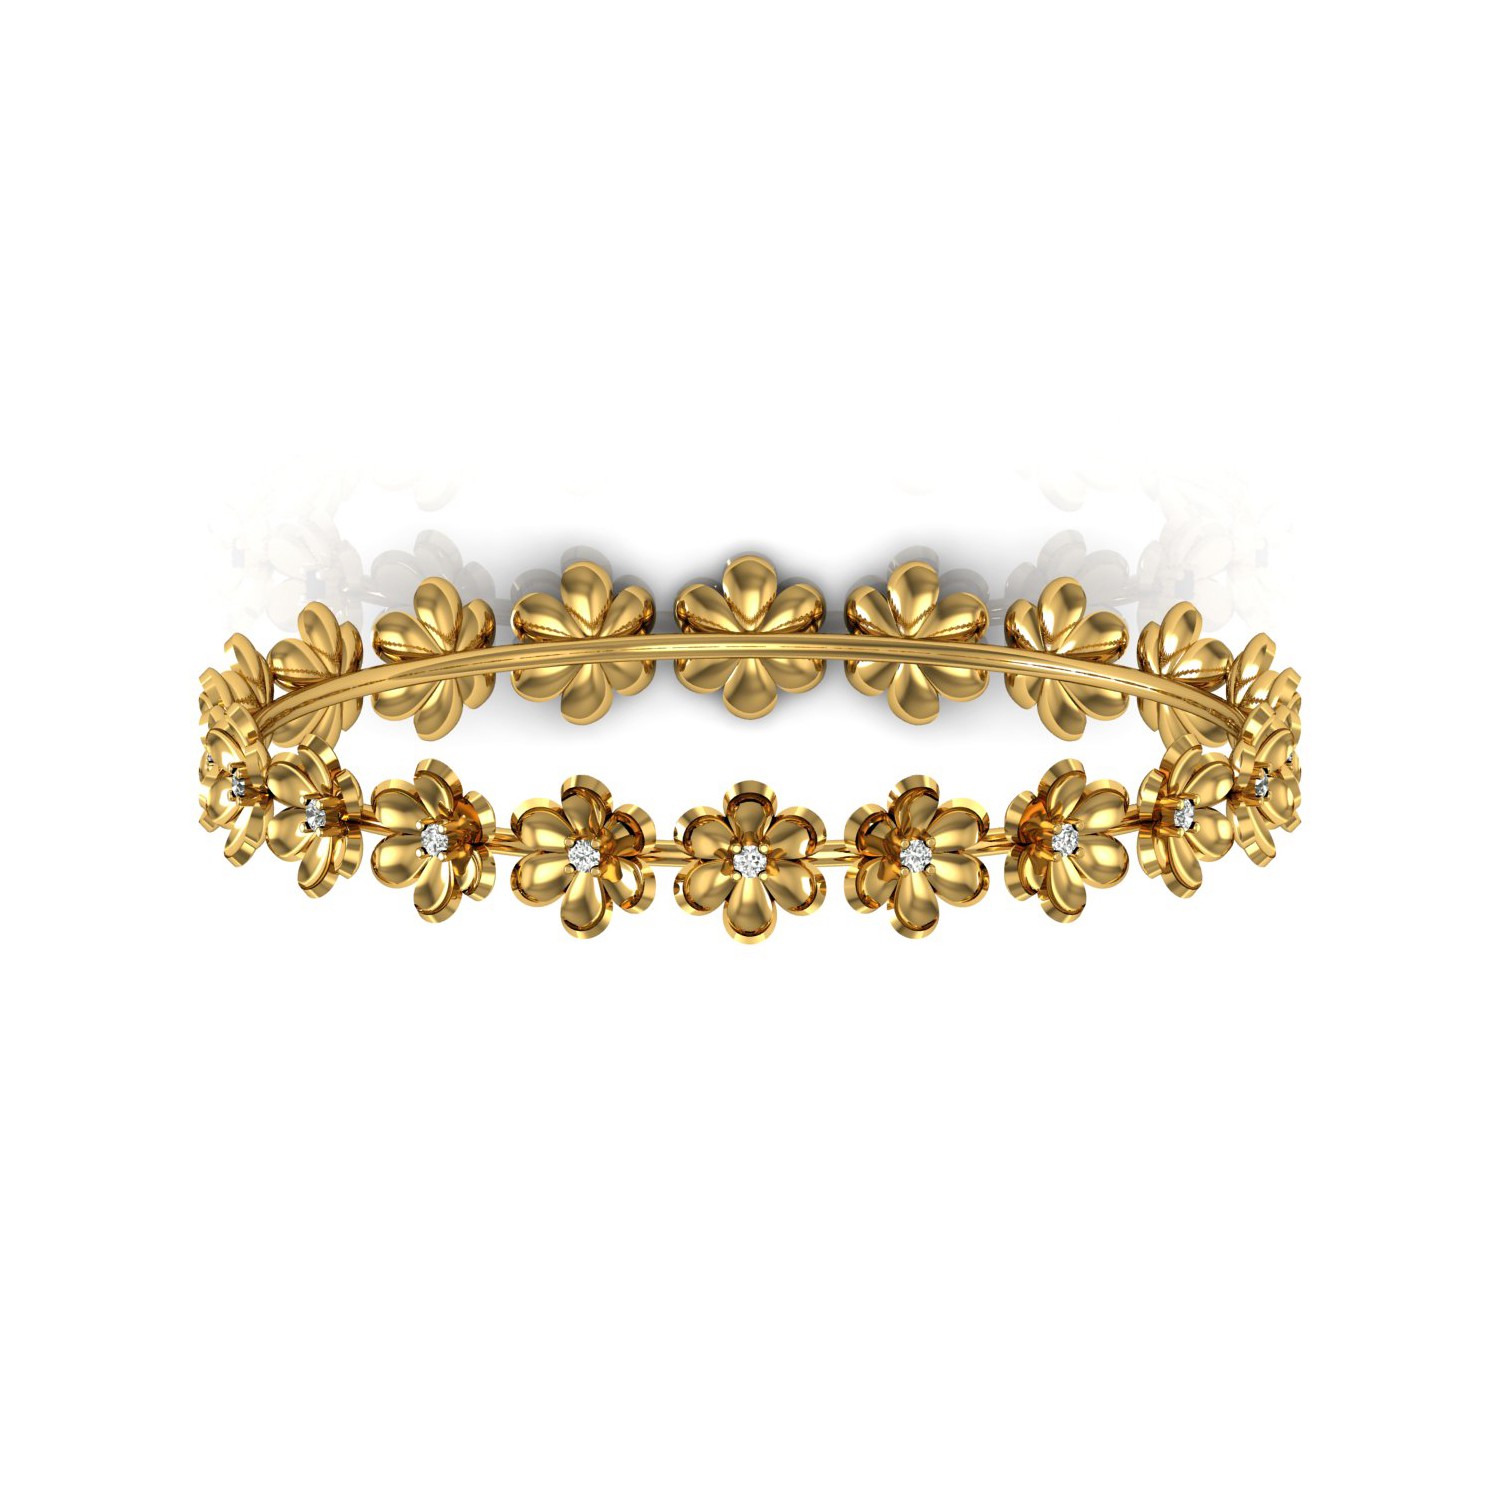 Solid gold real diamond floral design bangle